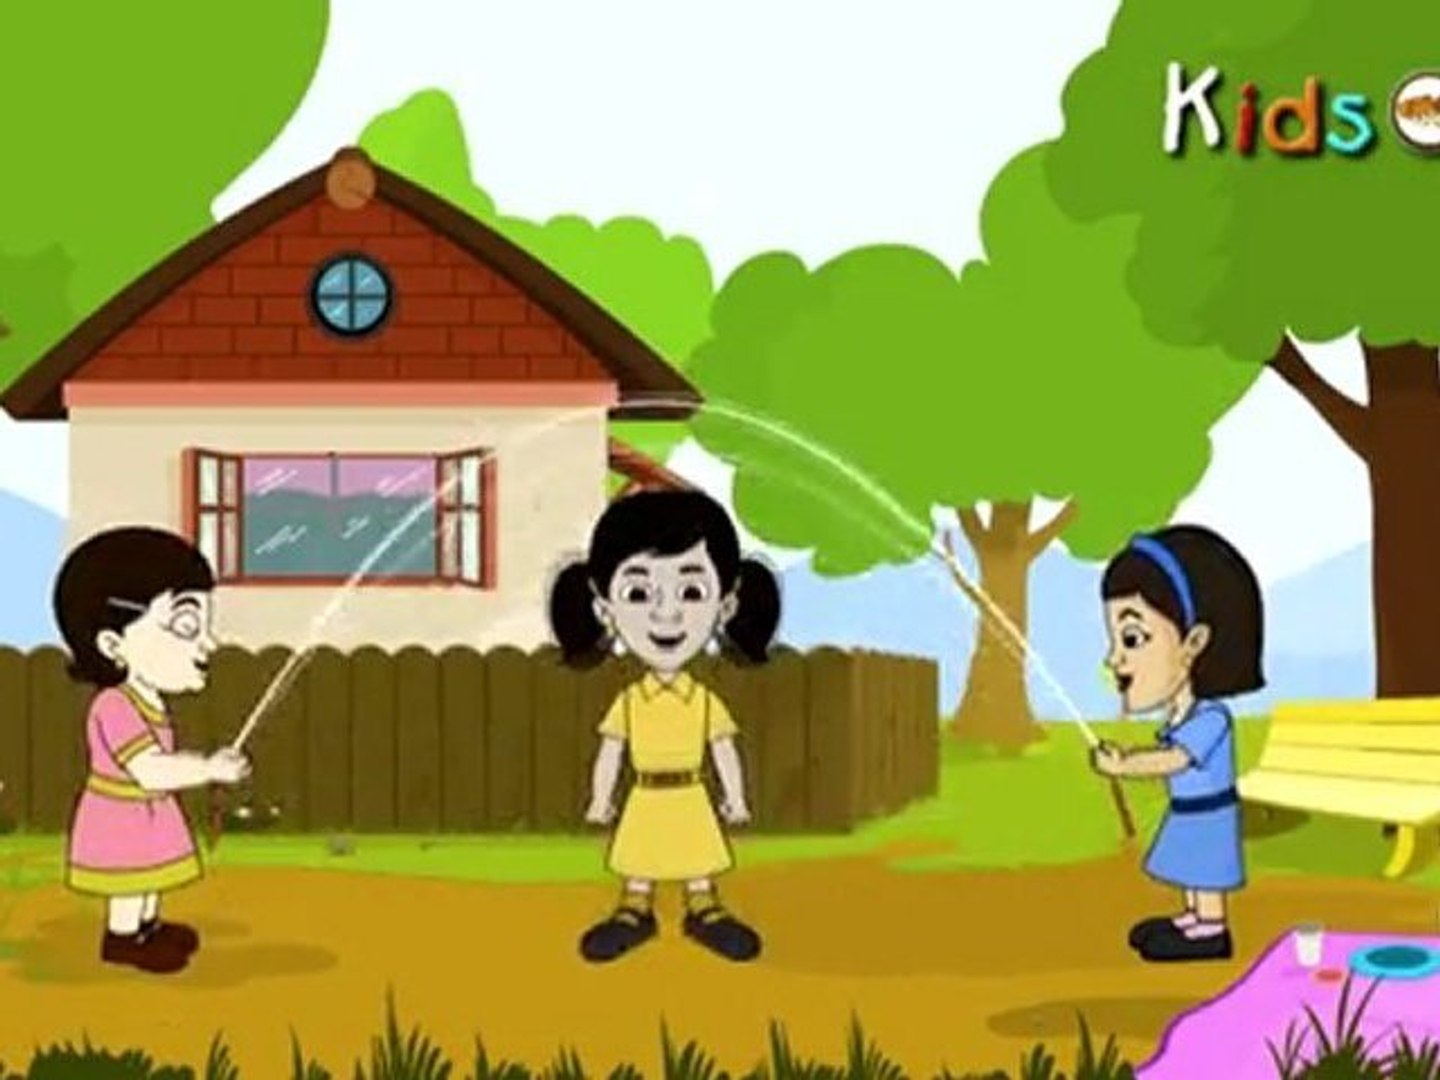 Skip to my Lou - Skip SKip Skip - Kids Rhymes - English Animated Rhymes -  video Dailymotion